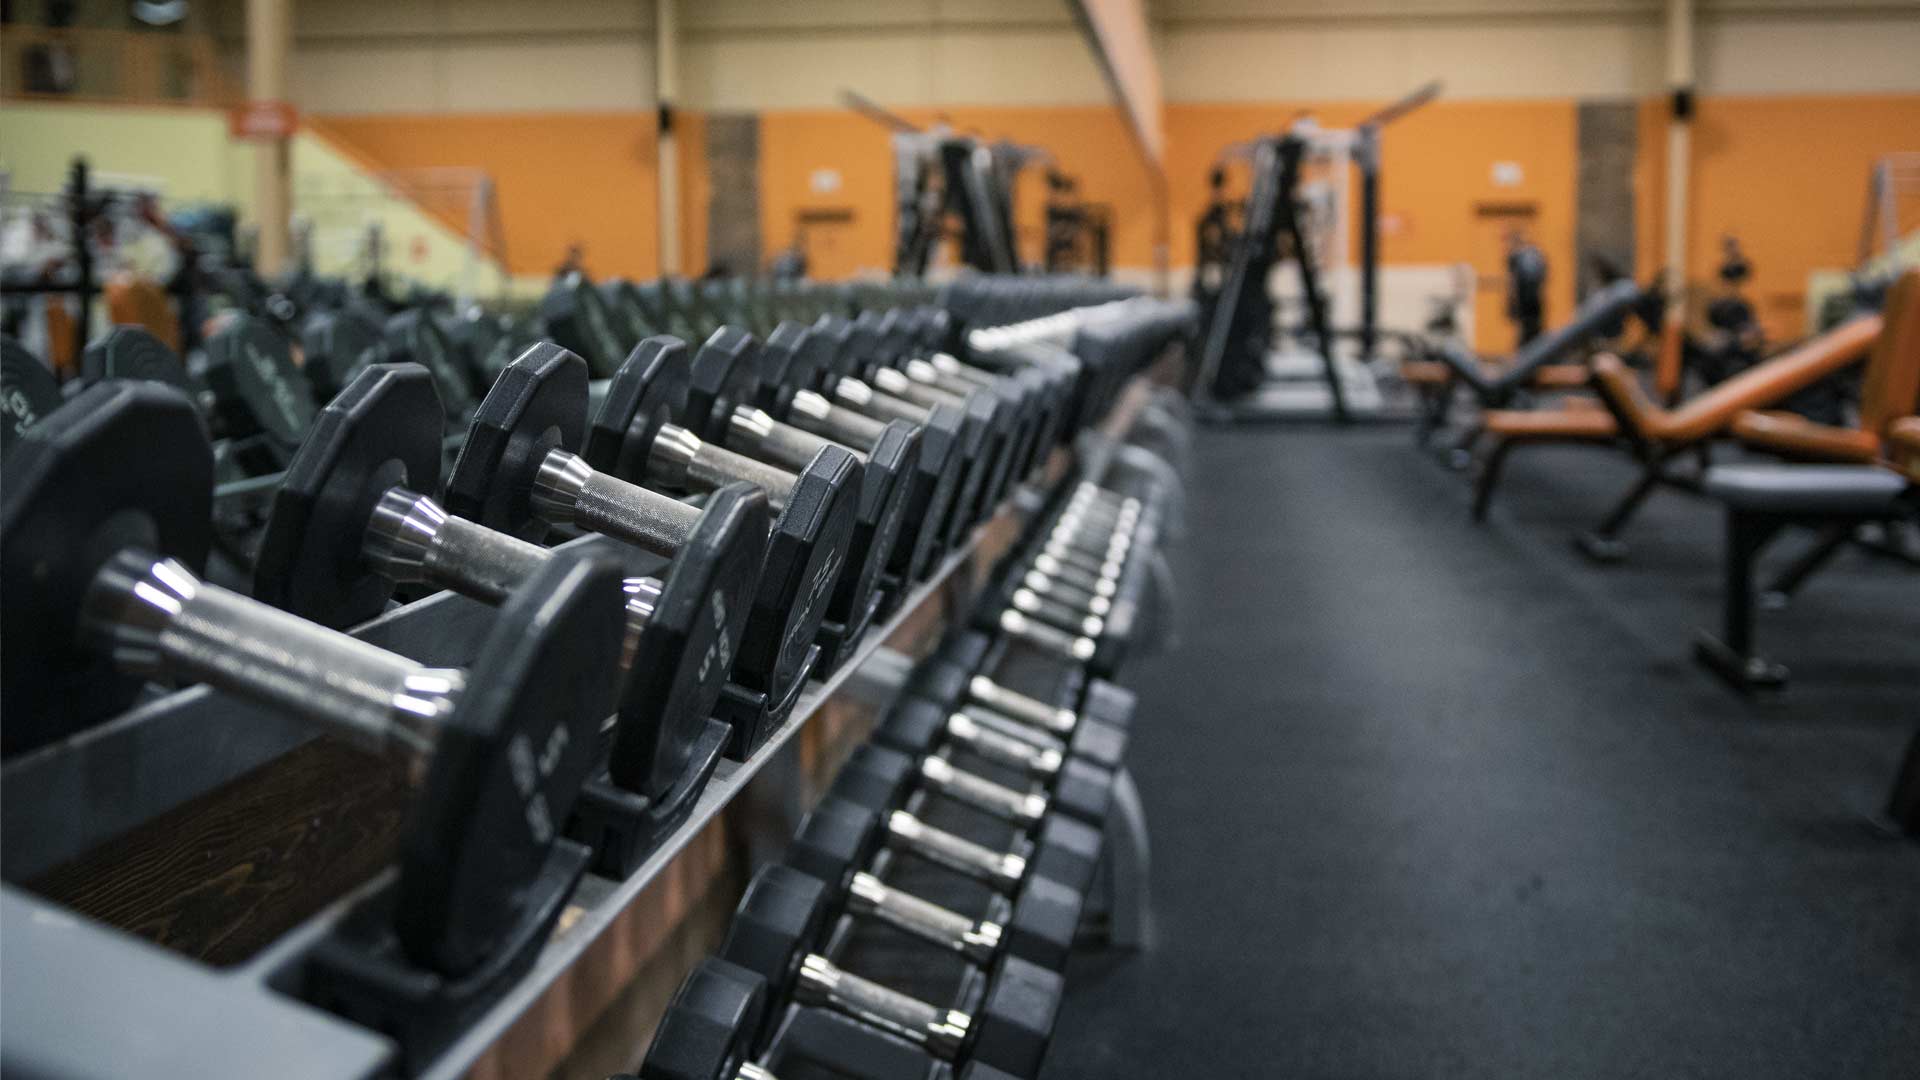 Fitness Evolution Bellingham Gym - Starting at $29.99 Per Month